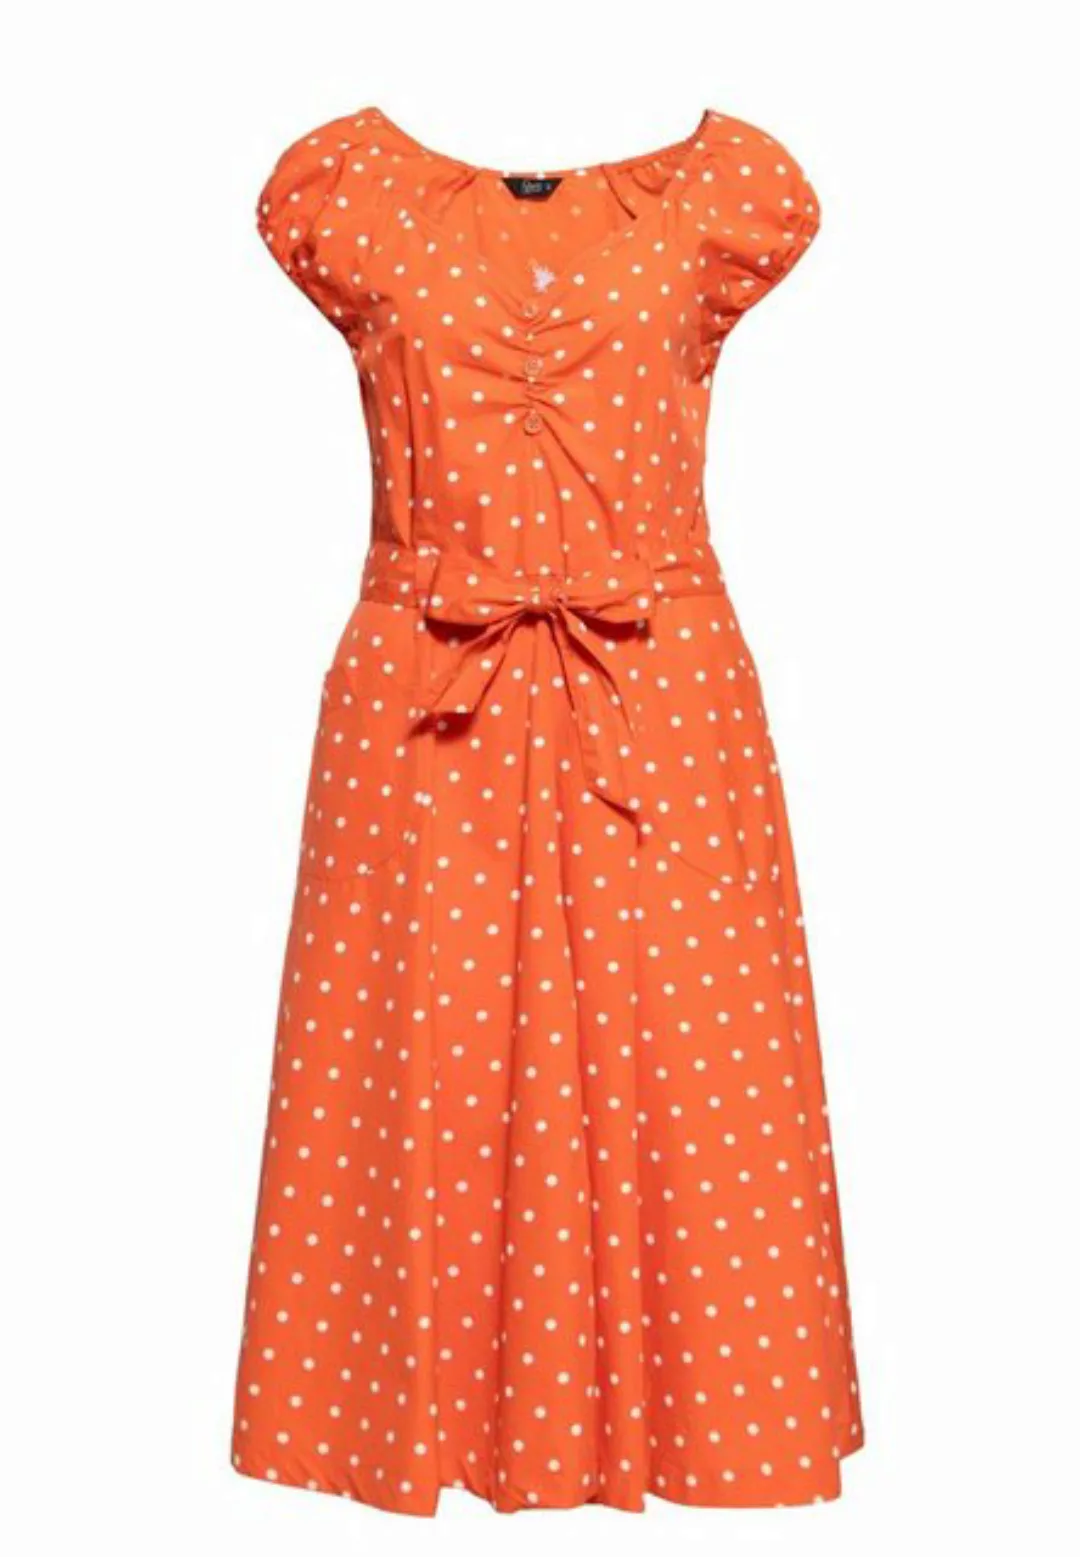 QueenKerosin Sommerkleid Mit Polka Dots All-over-Print günstig online kaufen